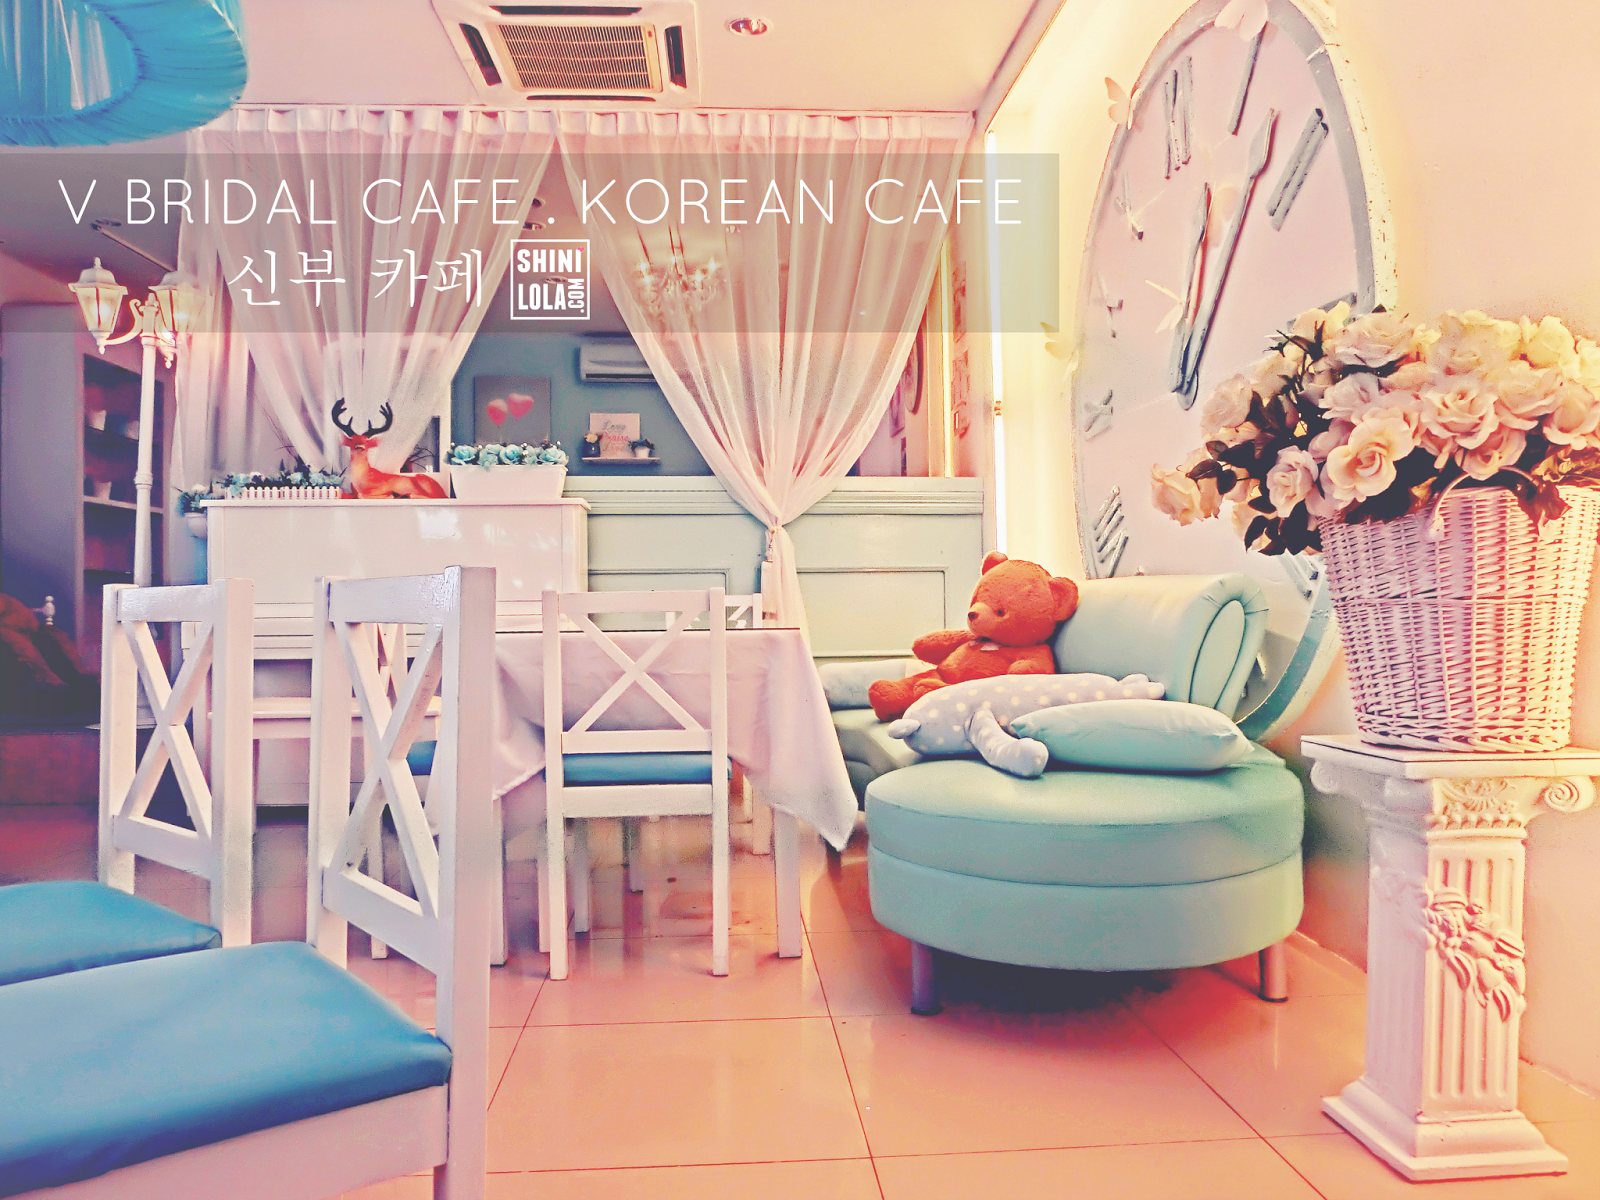  SHINIxFOOD V BRIDAL CAFE  KOREAN CAFE  IPOH  SHINI 